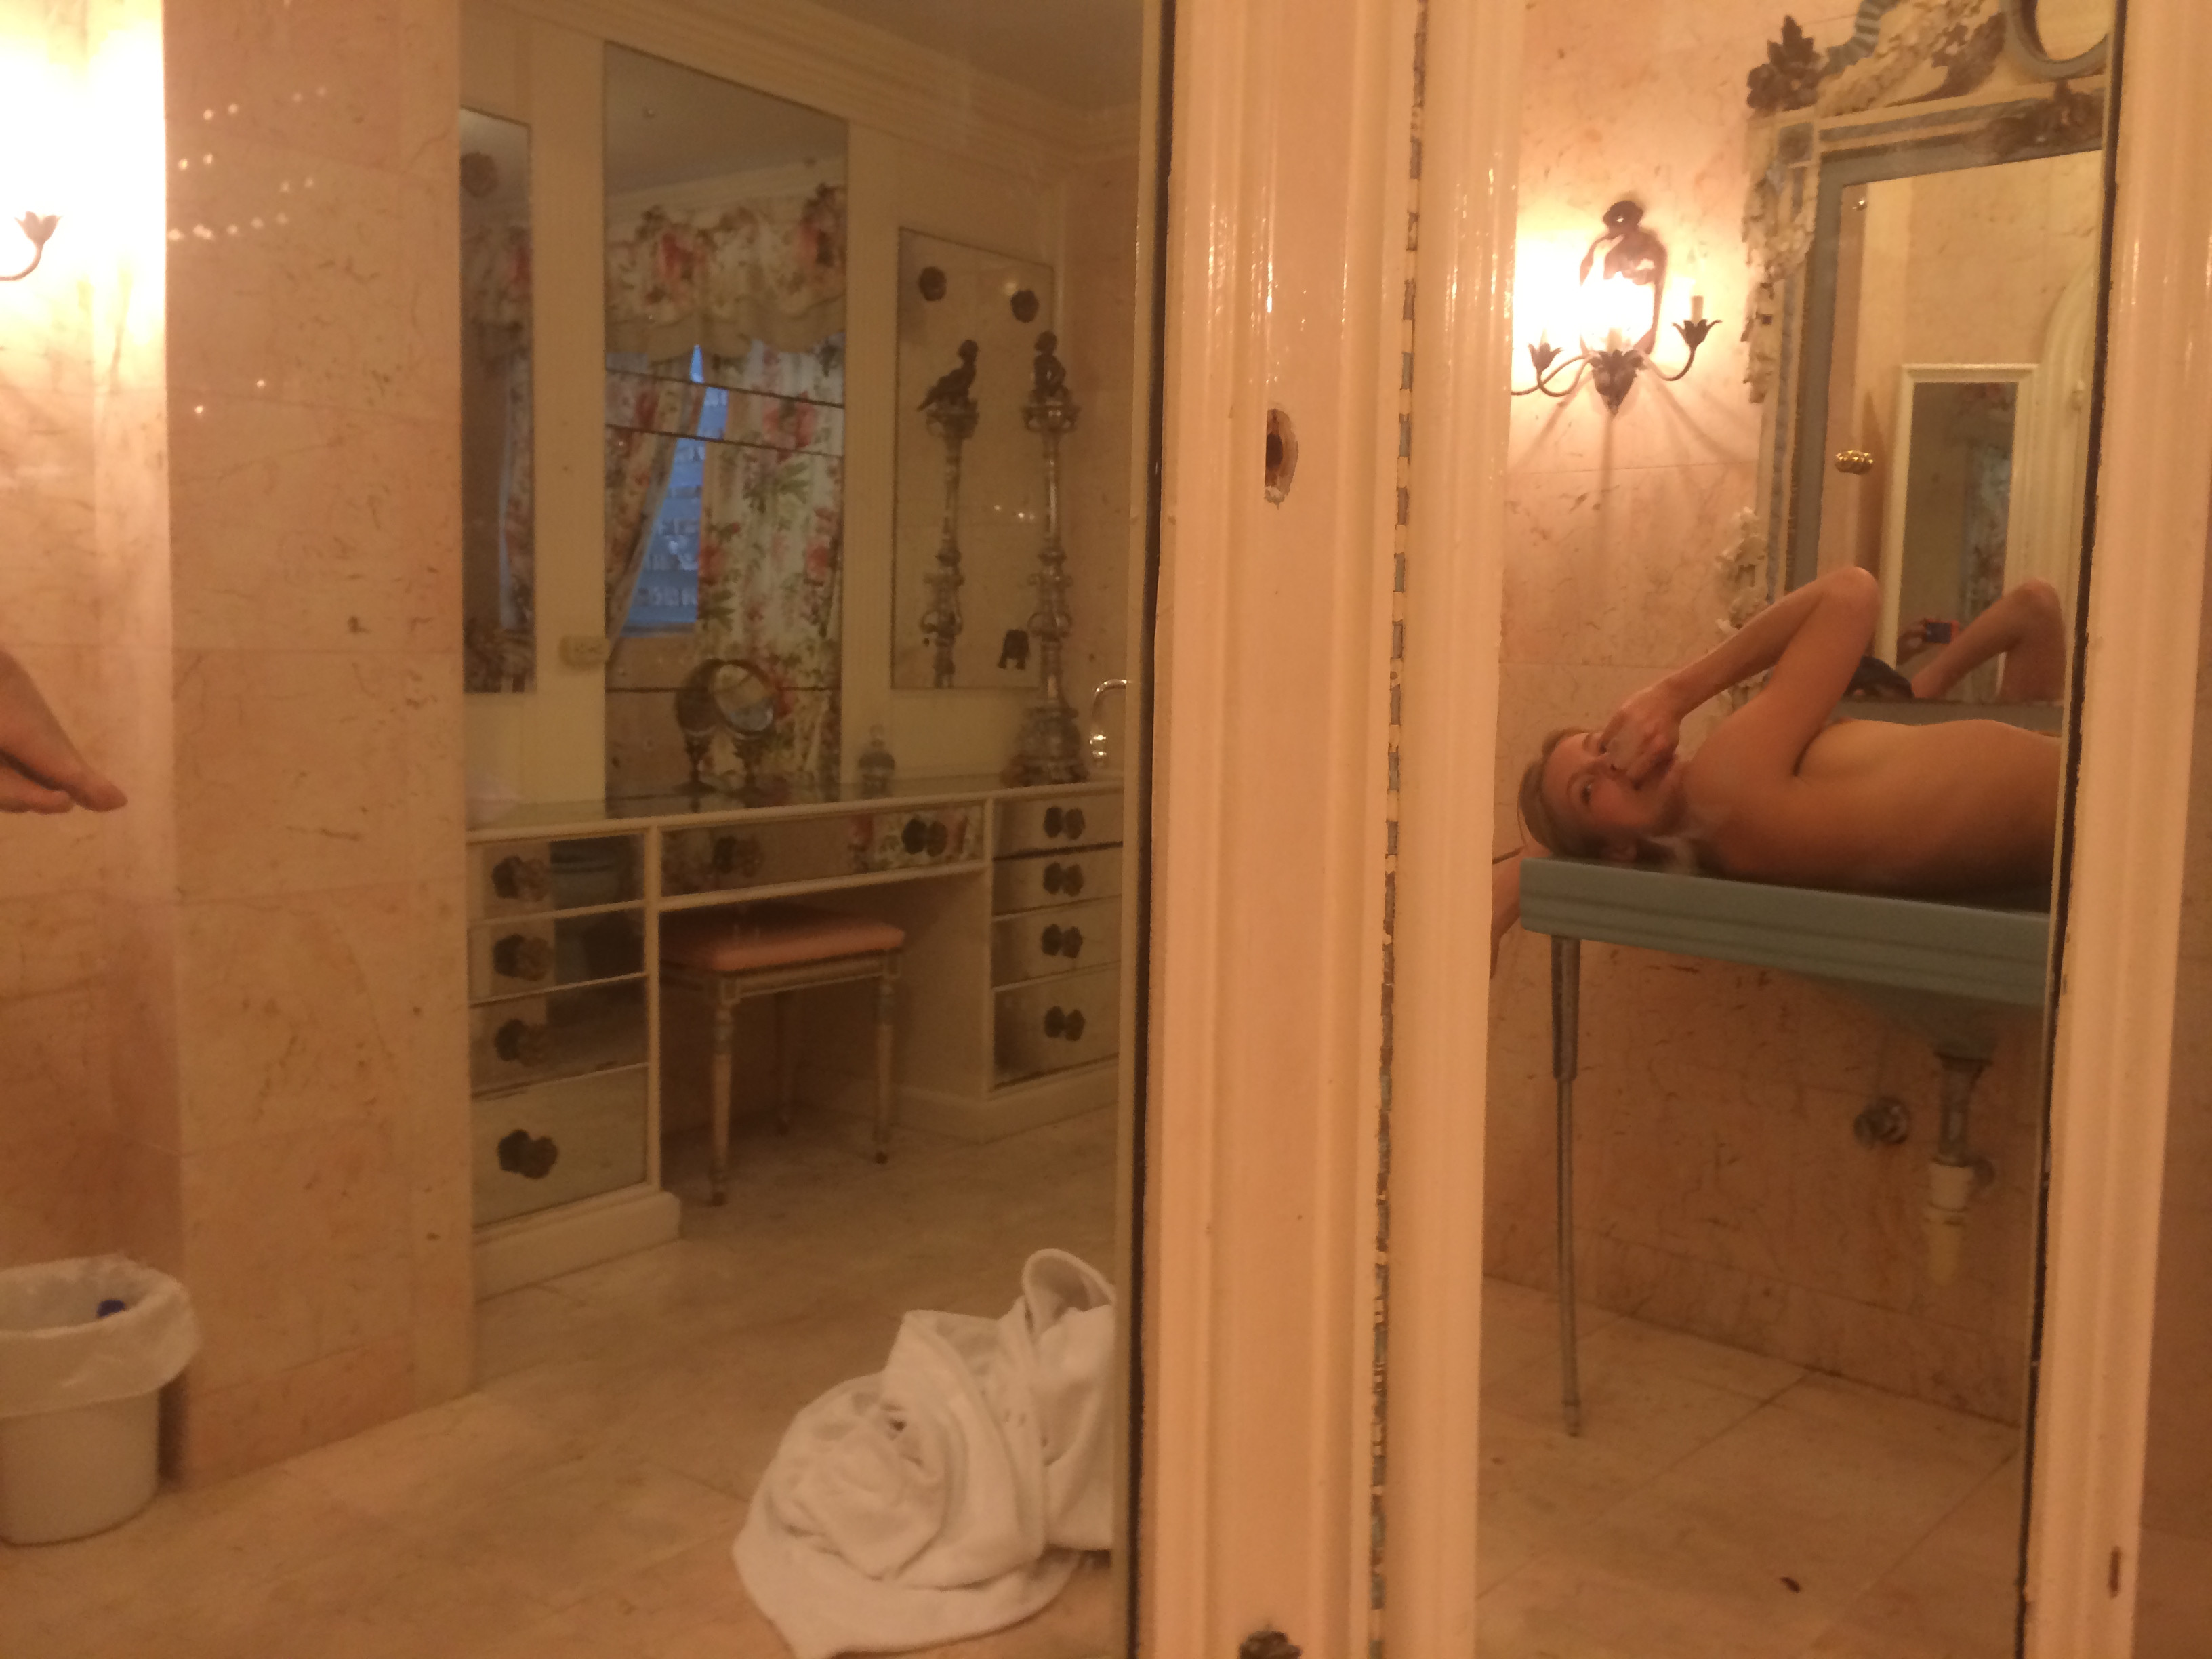 Naked Allegra Carpenter In 2014 Icloud Leak The Second Cumming